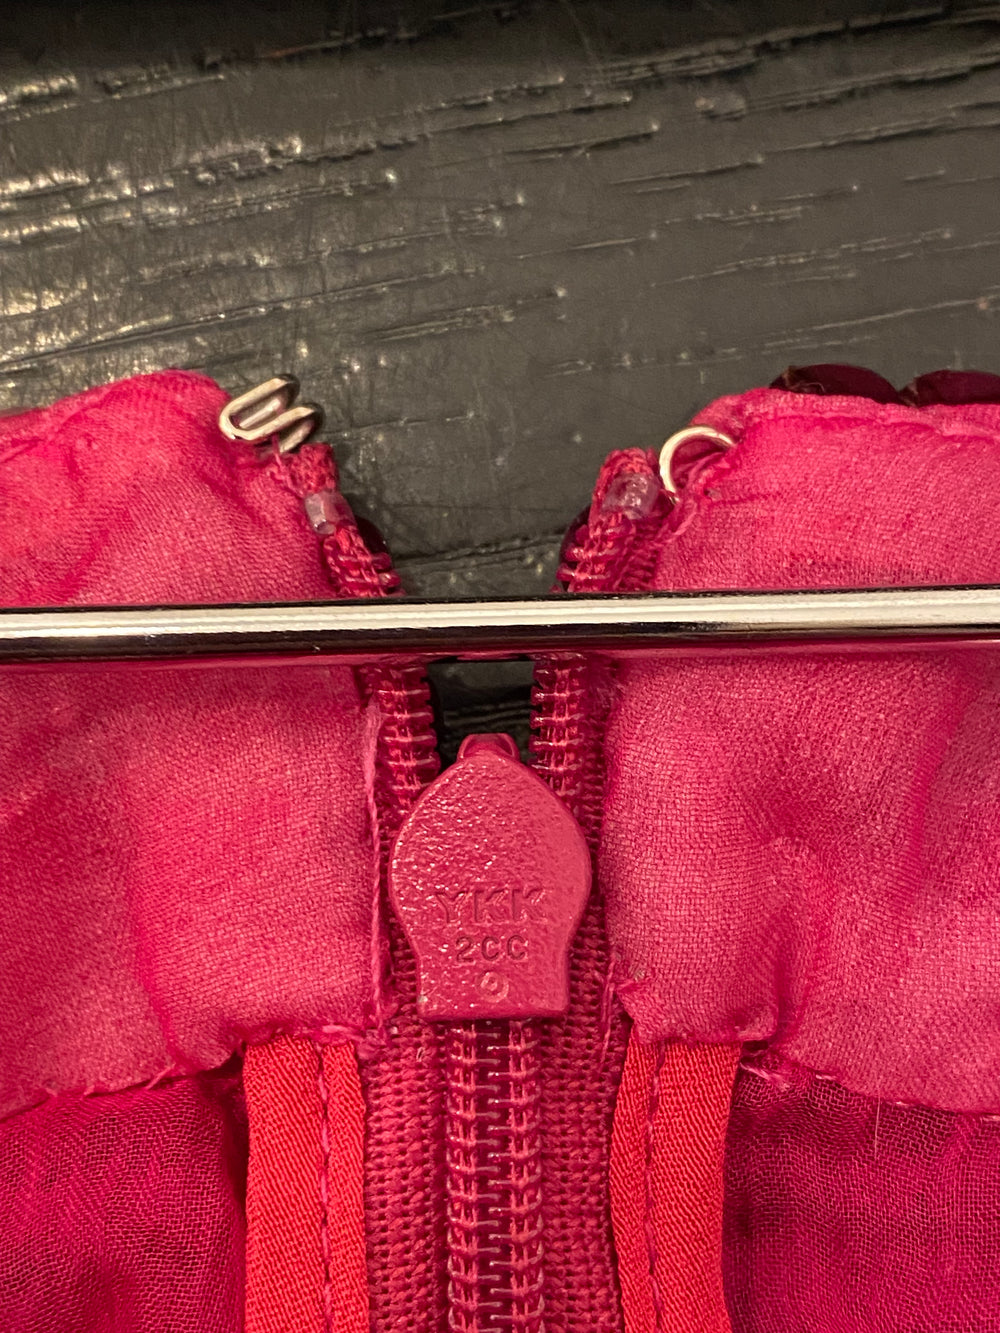 Stella McCartney Deep Pink Sequined Skirt Size 40 (Fits uk10)